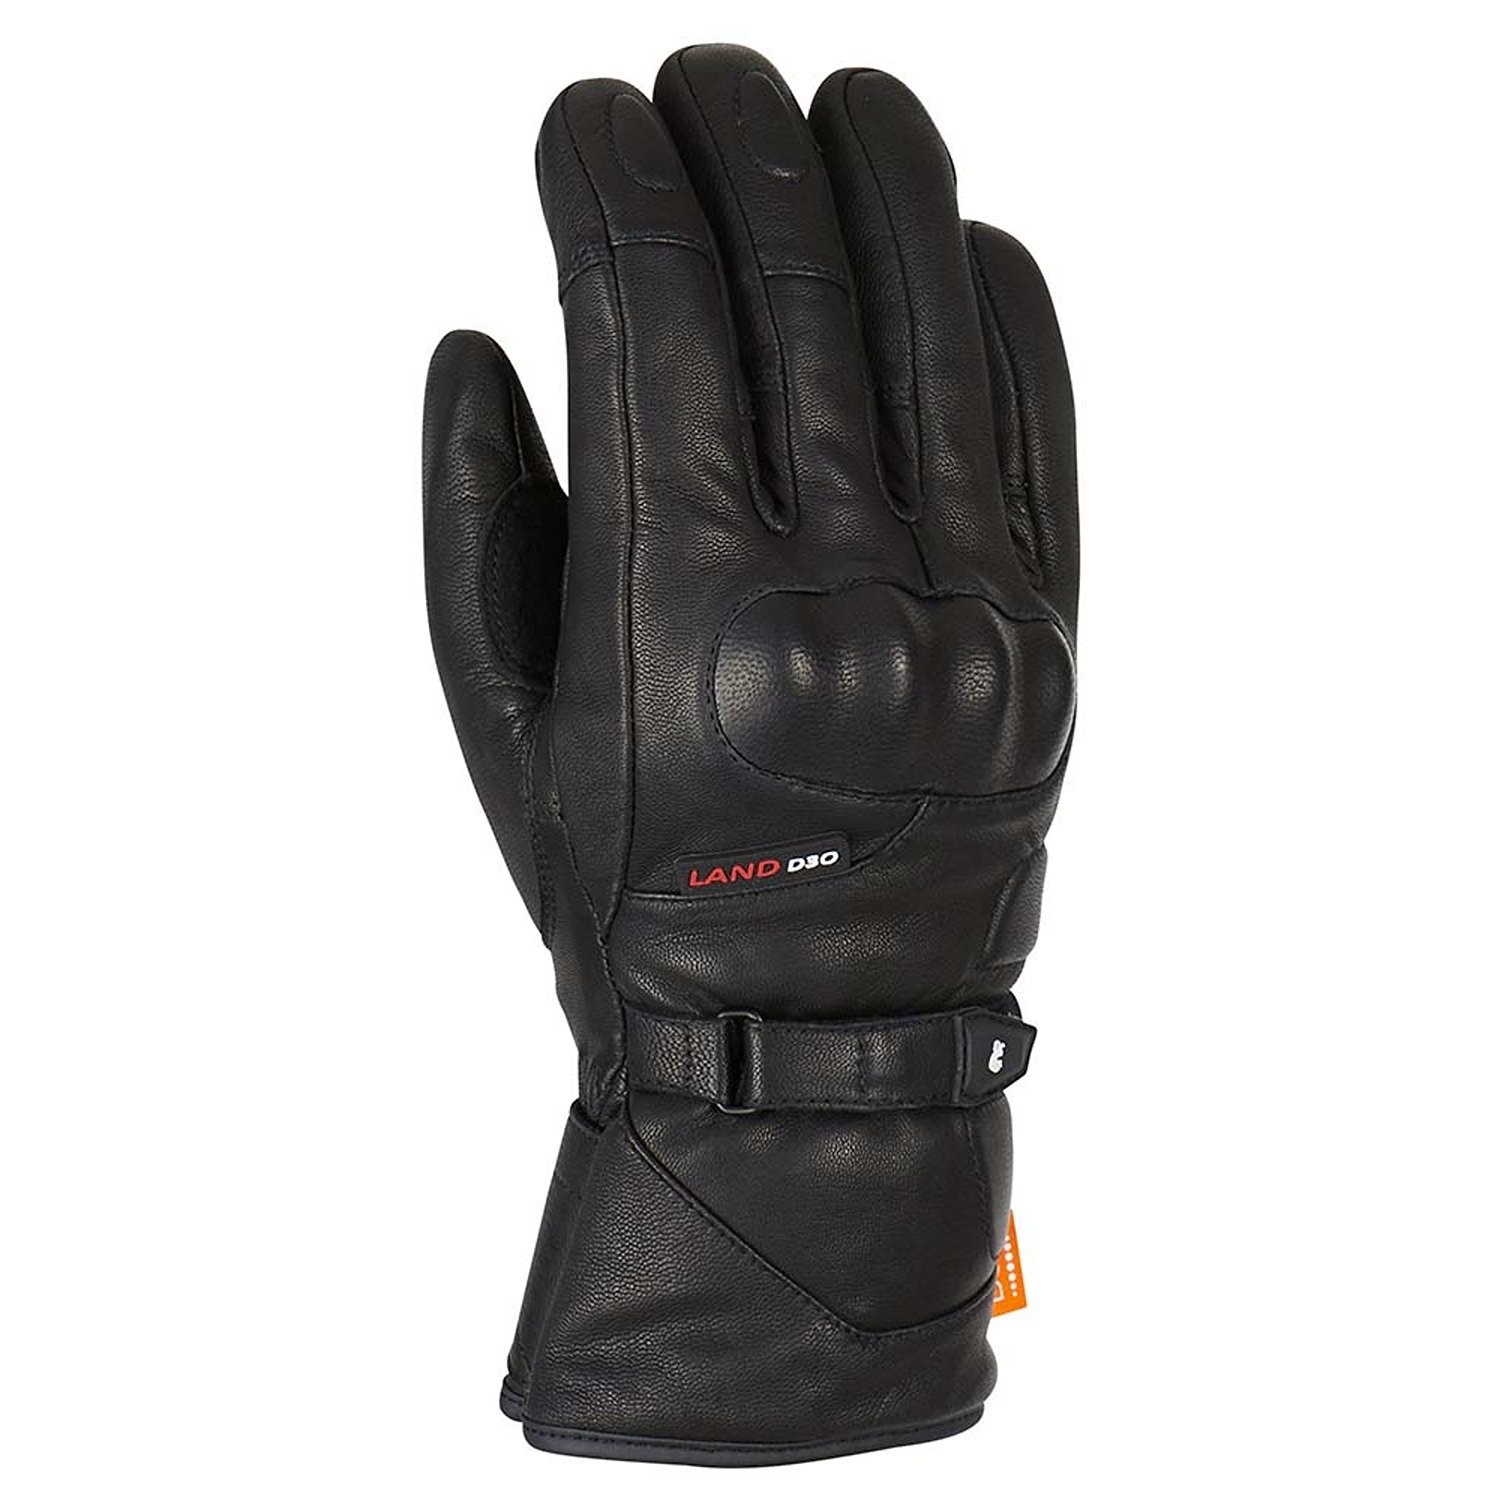 Furygan Land DK D30 Gloves Black Size 3XL